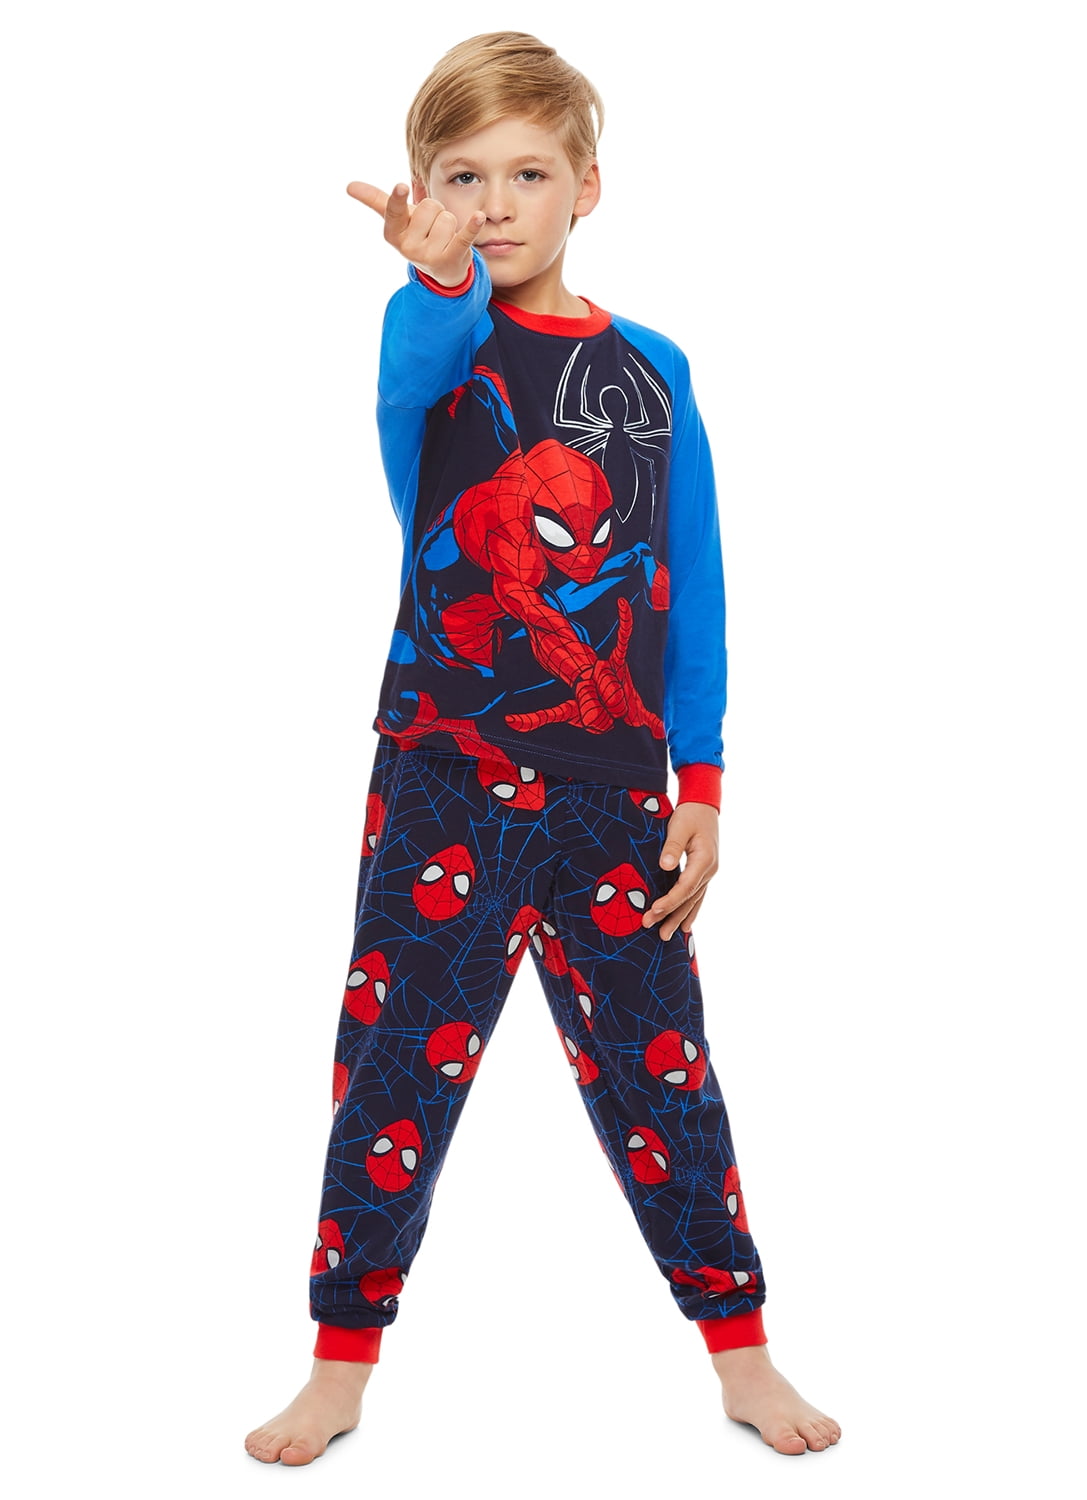 Details about   2Pcs/Set Kids Boys Children Spiderman Sleepwear Pajamas Pjs Matching Sets 1-8Y 